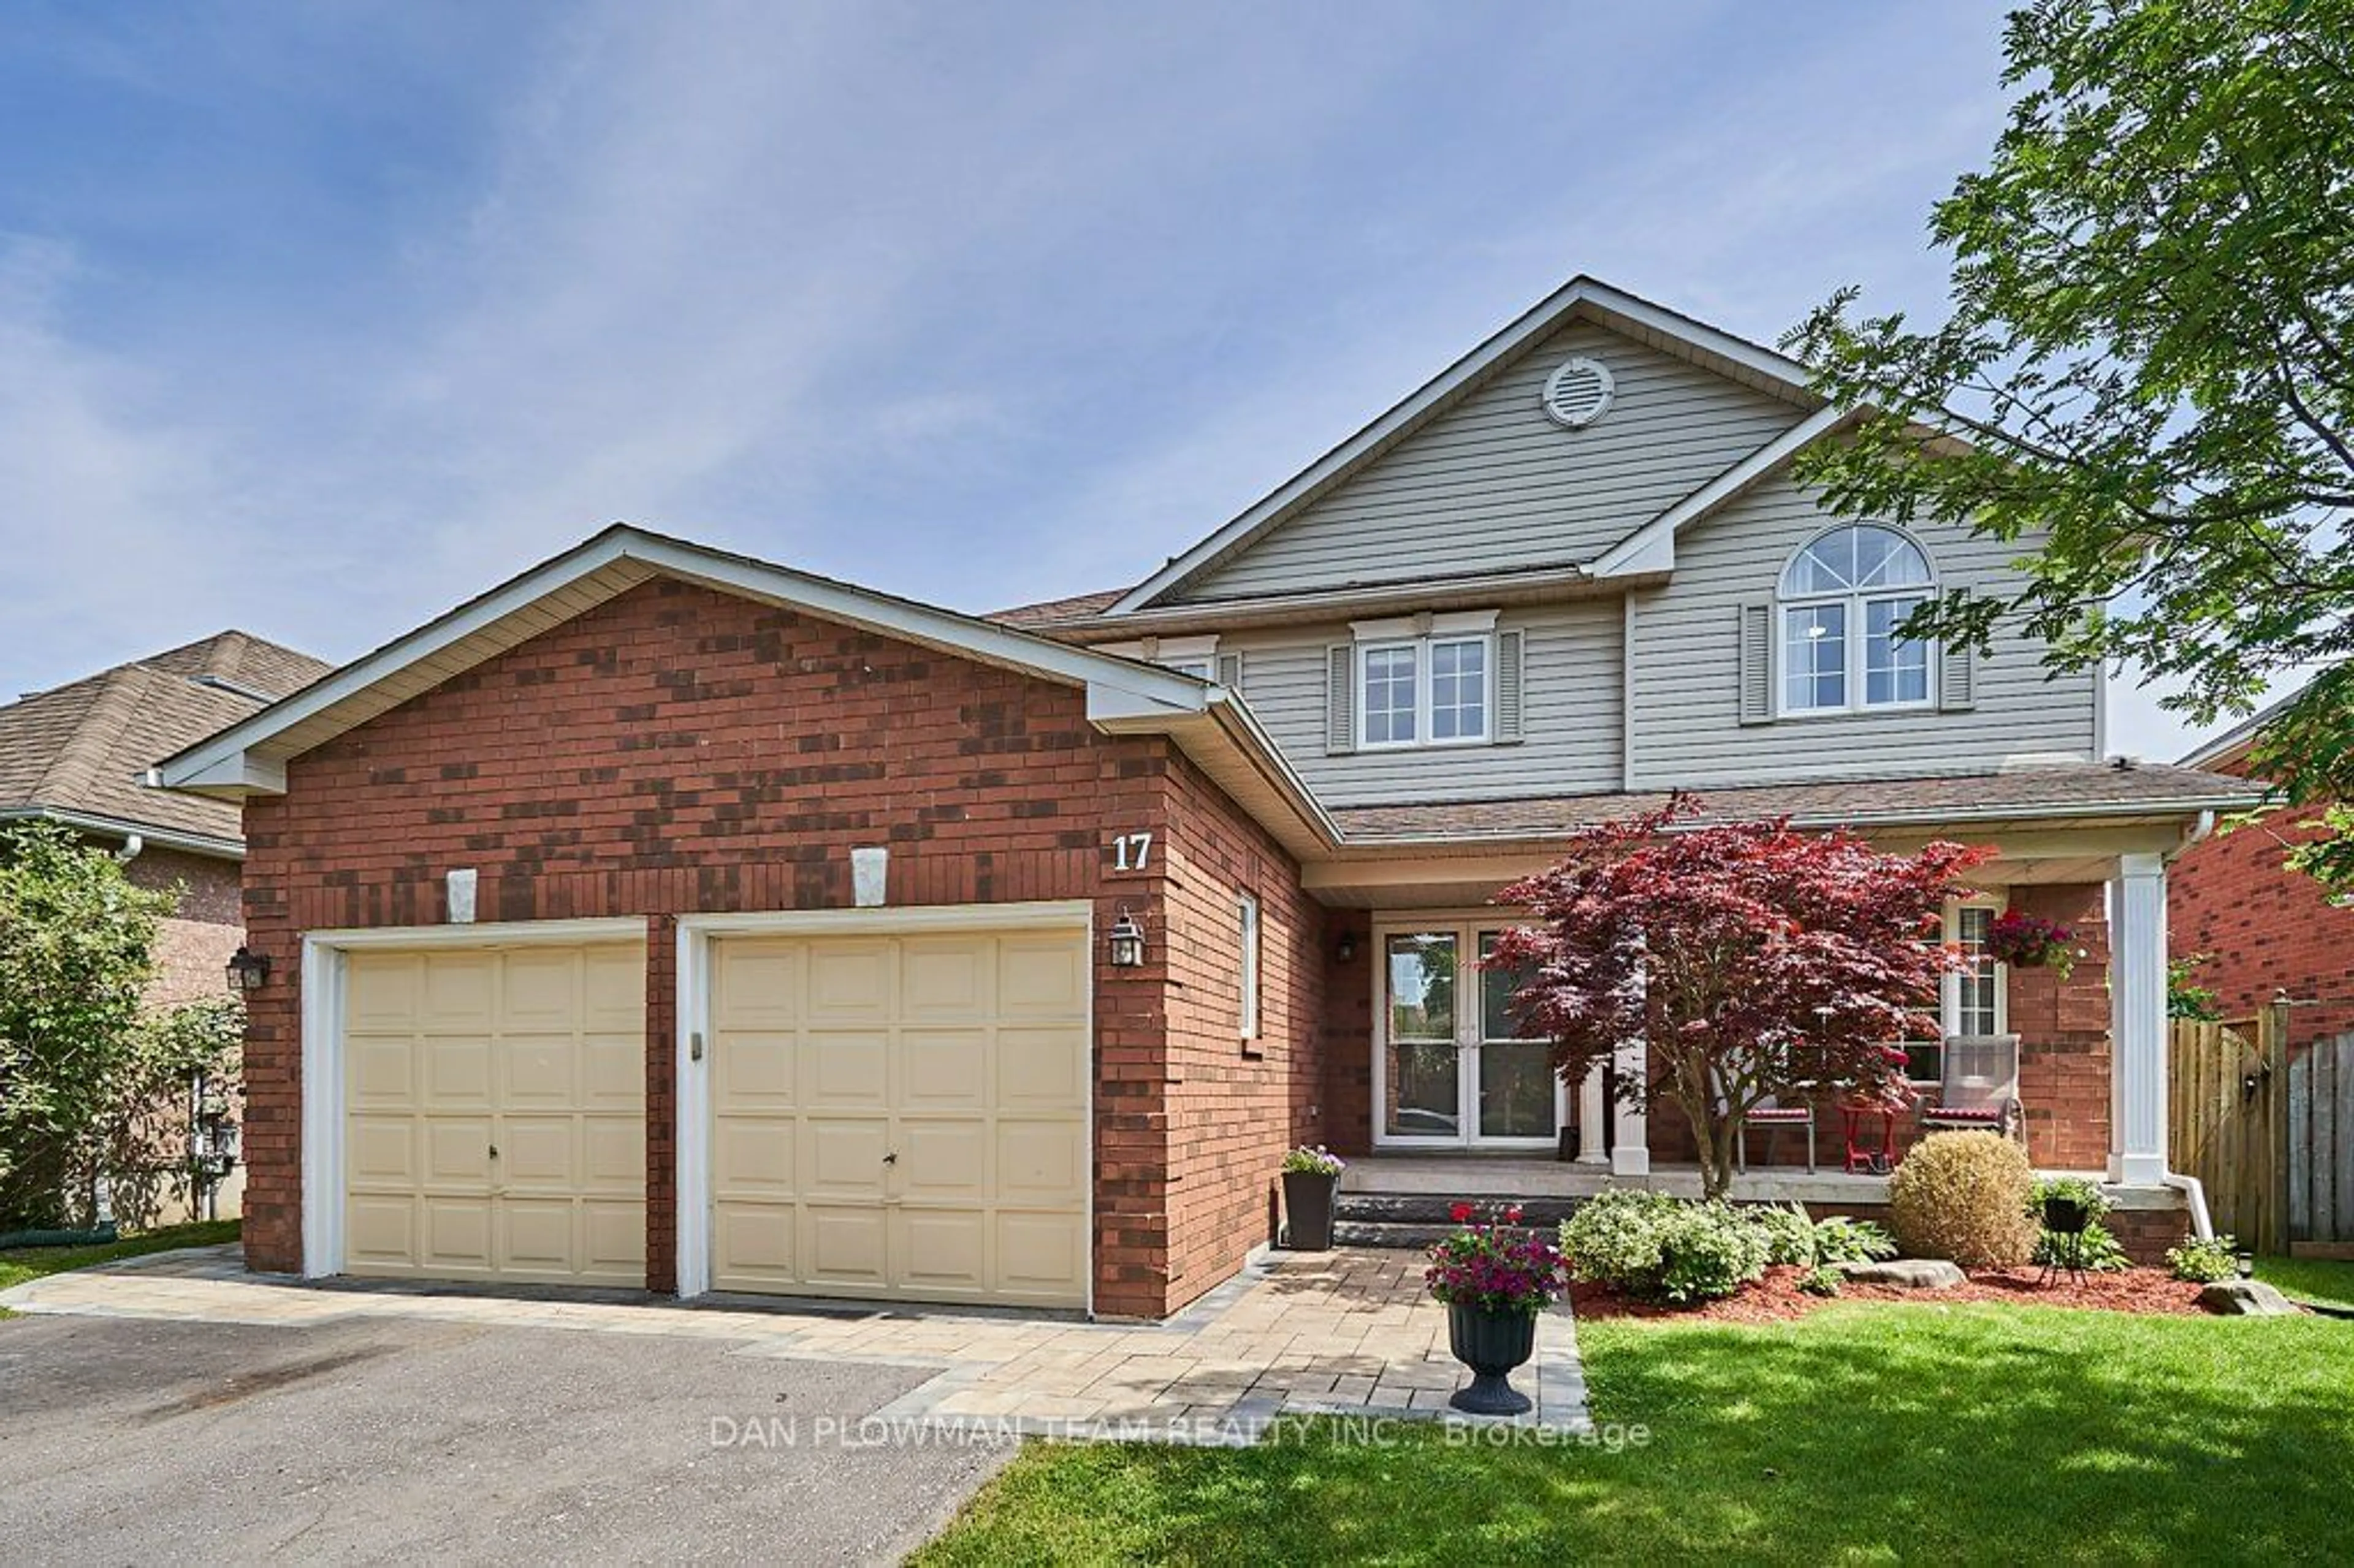 Home with brick exterior material for 17 Thornbury St, Clarington Ontario L1E 2C1